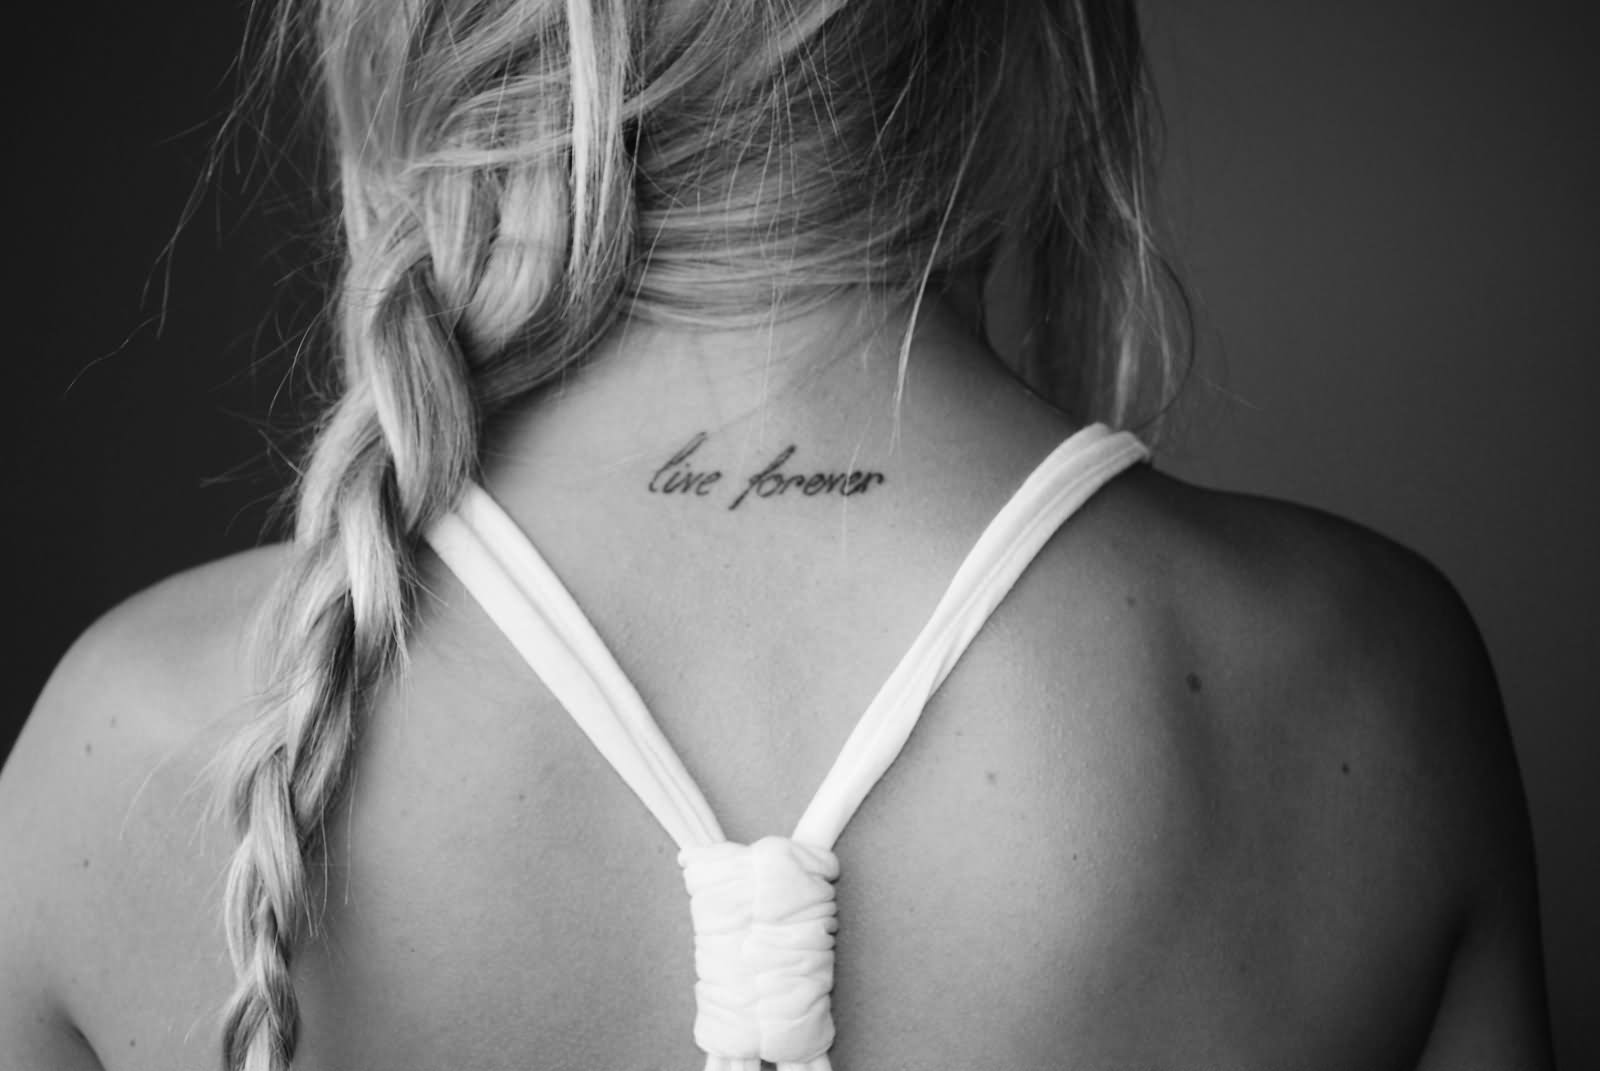 Live Forever Words Tattoo On Girl Back Neck